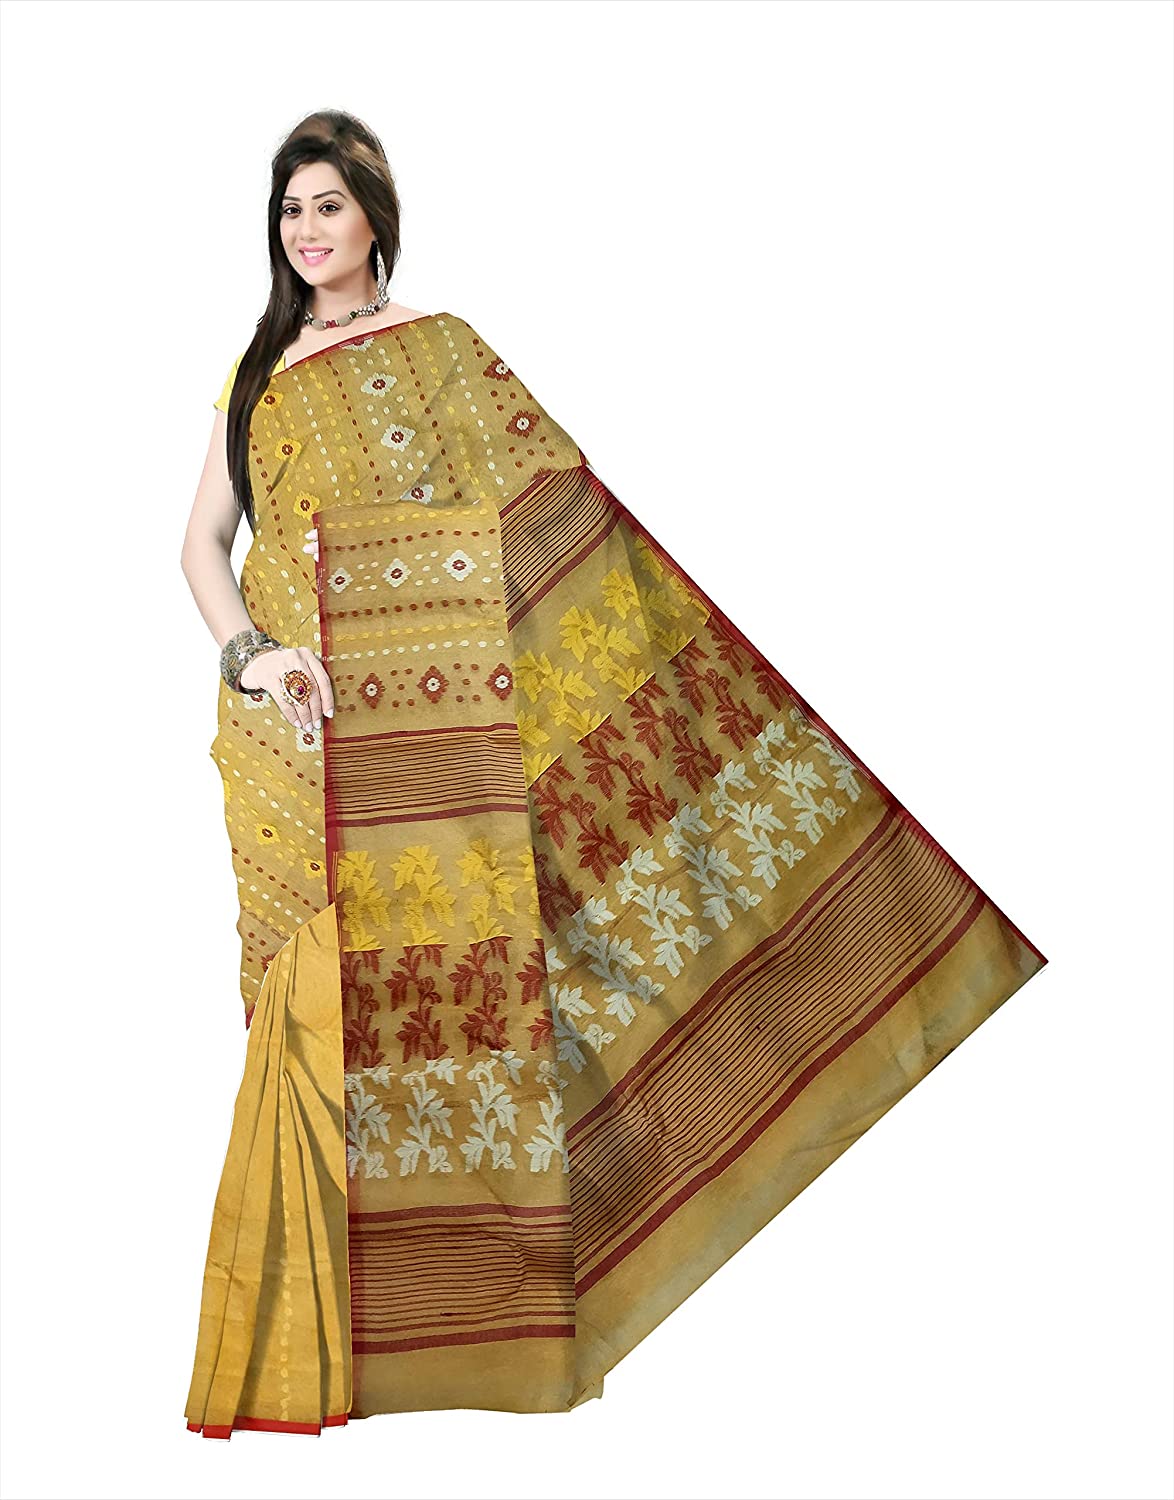 Pradip Fabrics Ethnic Women's Cotton Tant Cotton Yellow Color Saree